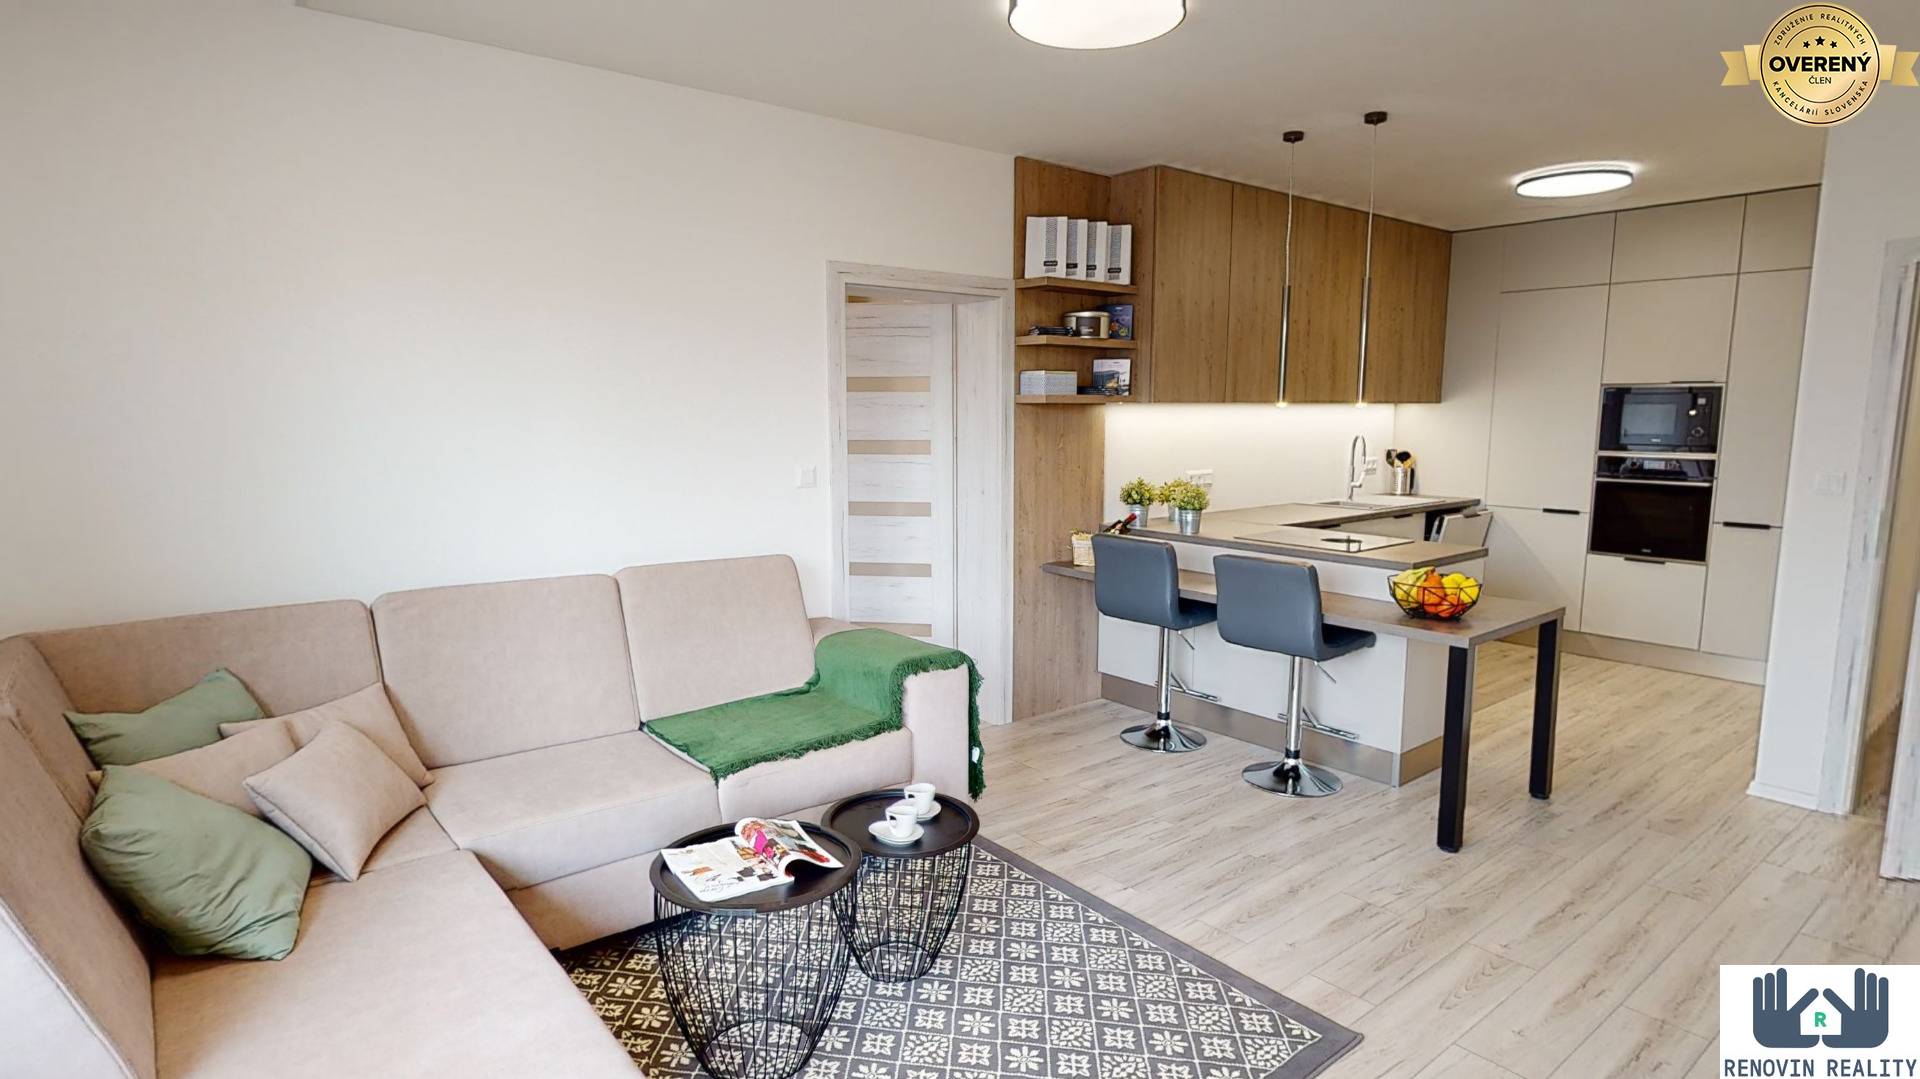 2-izbový byt v novostavbe Hájik vo Zvolene na predaj H5 - obývačka 